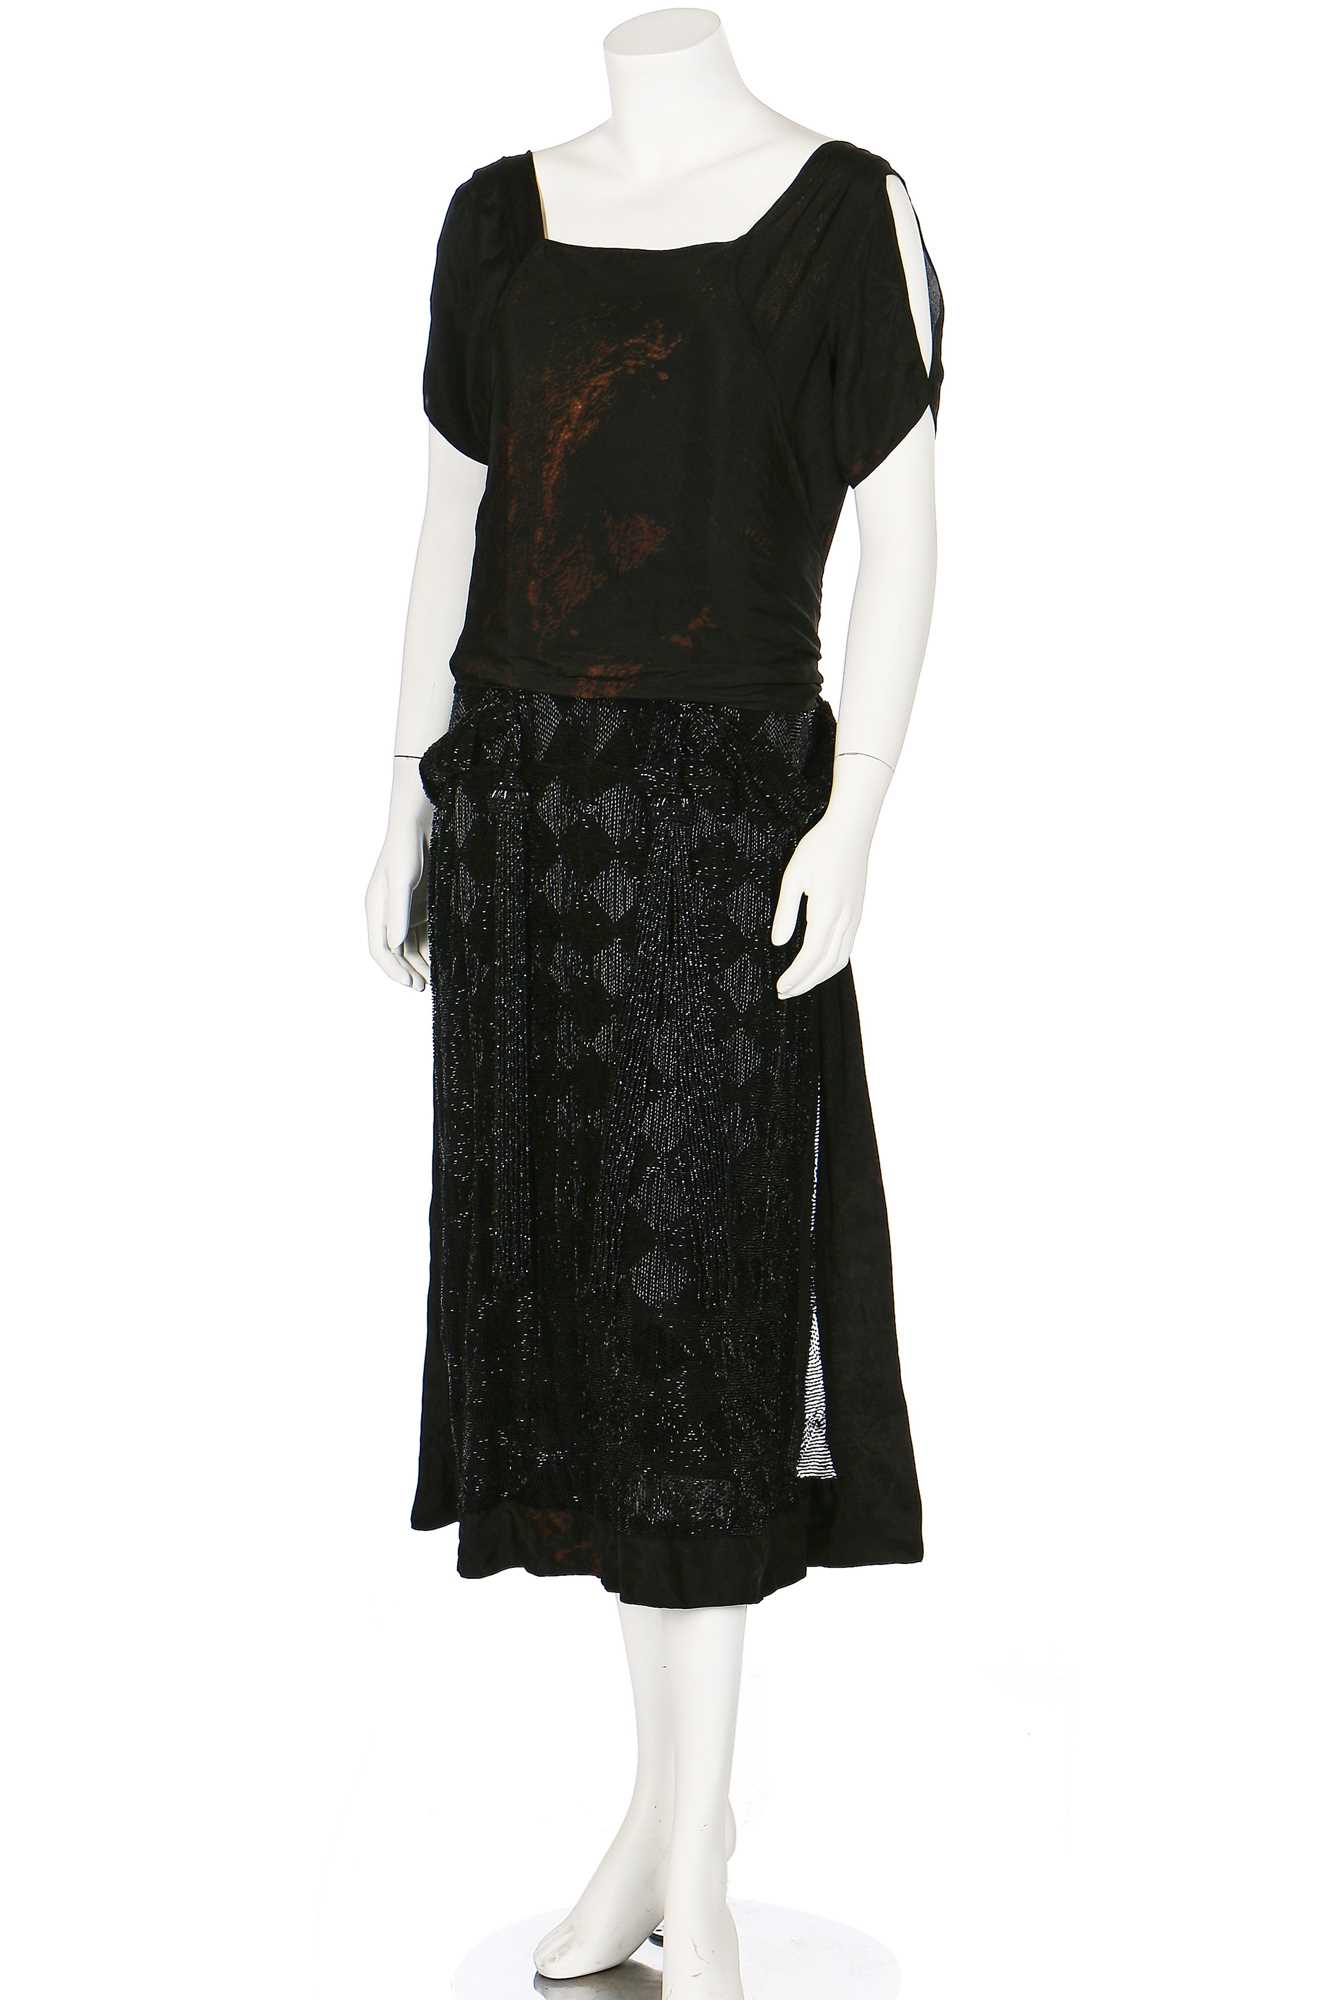 Small Black Dress - Coco Chanel - History 